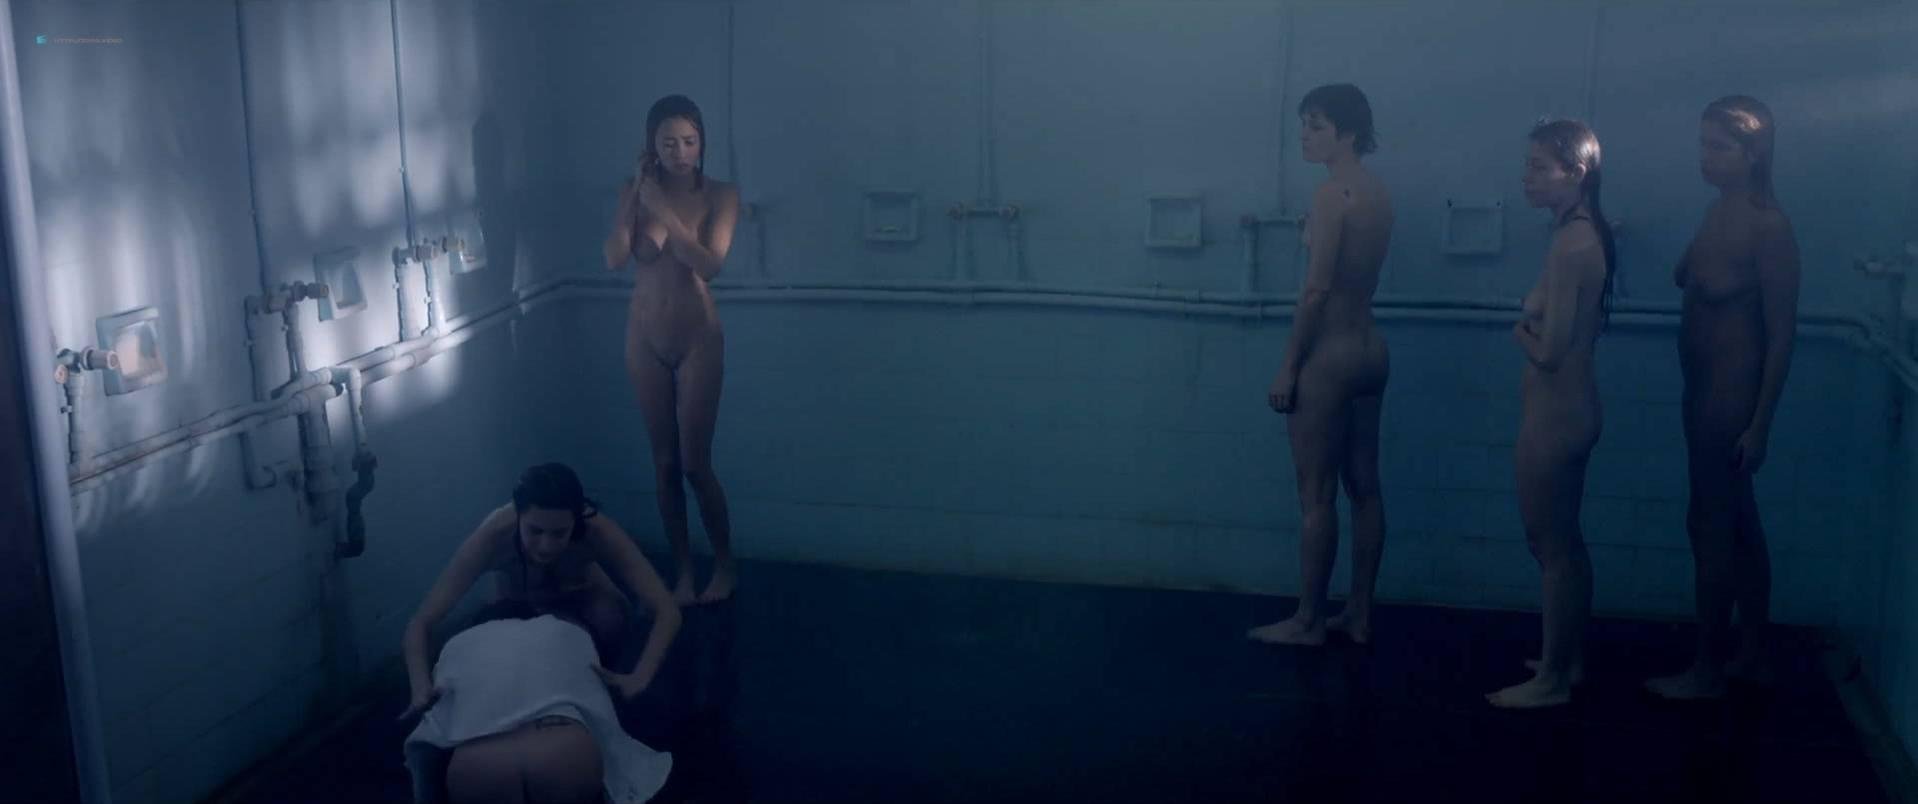 Nude video celebs » Belén Chavanne nude, Yamila Saud nude, Sofia Gala nude  - Hipersomnia (2016)